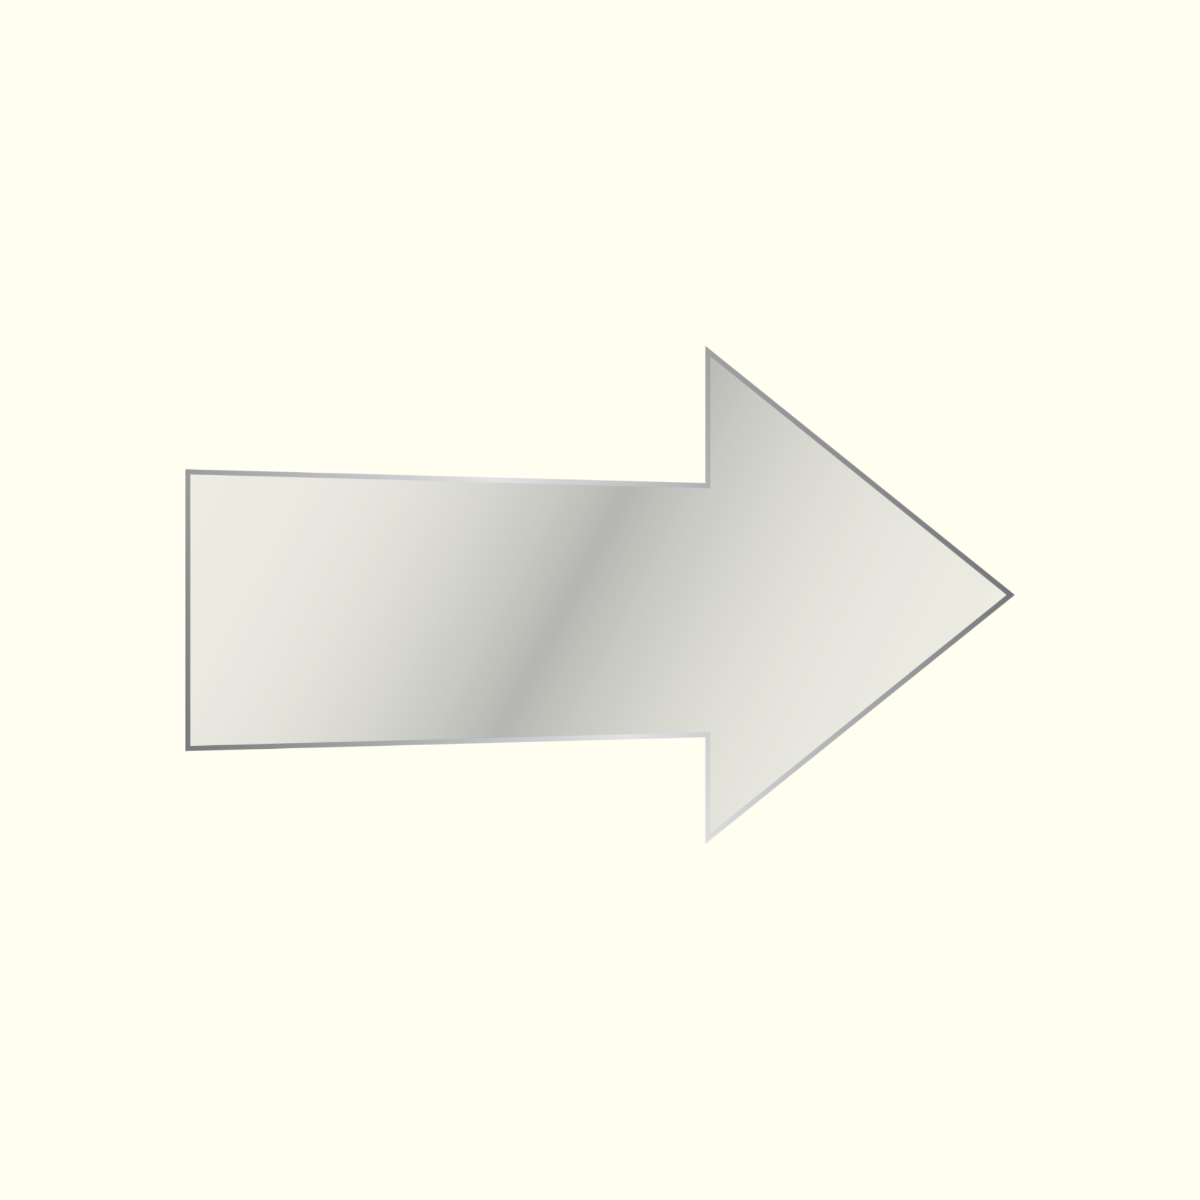 Transparent Arrow Vector